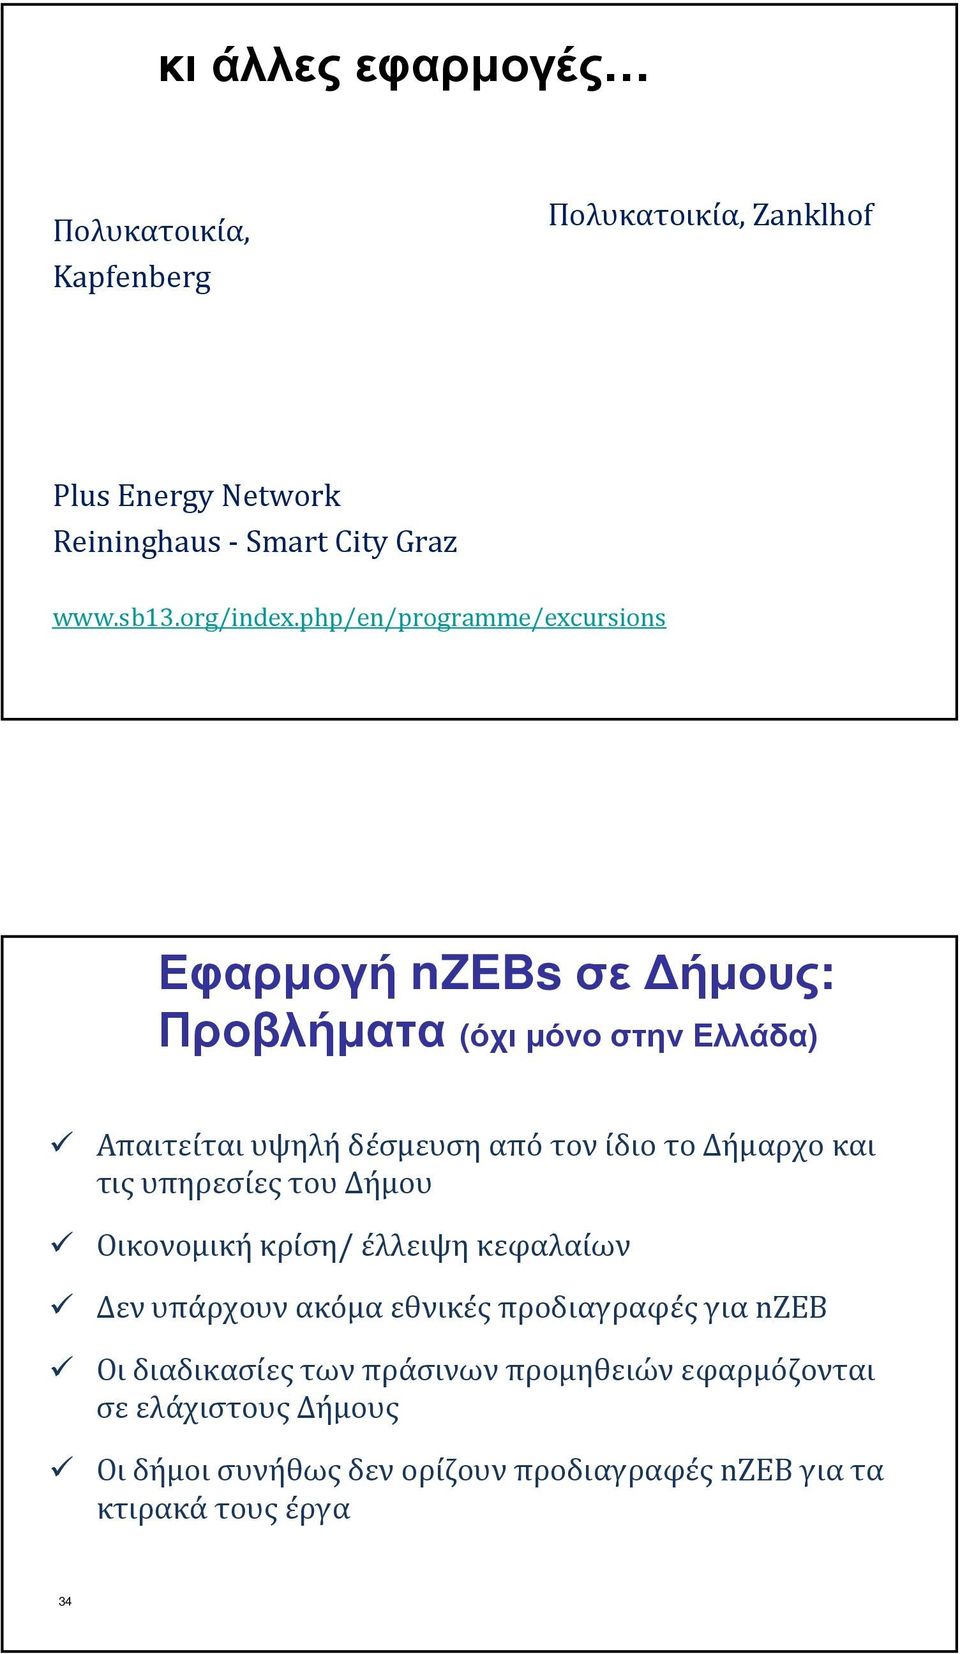 php/en/programme/excursions Εφαρµογή nzebsσε ήµους: Προβλήµατα (όχι µόνο στην Ελλάδα) Απαιτείται υψηλή δέσμευση από τον ίδιο το